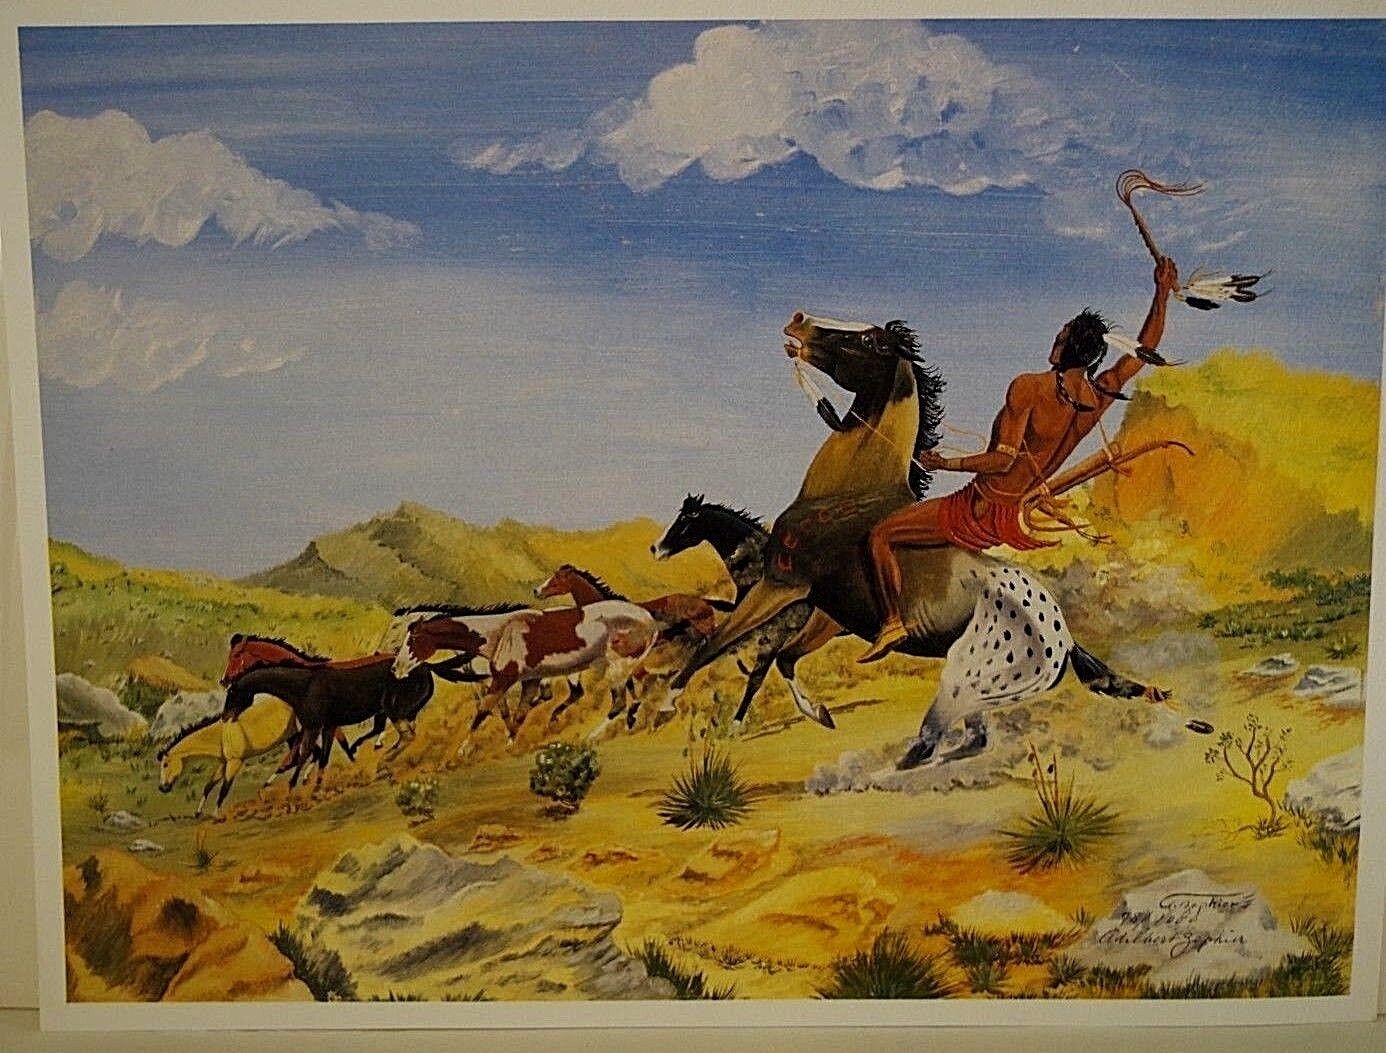 ADELBERT ZEPHIER WILD HORSES NATIVE AMERICAN ART PRINT L.E. 78/1000 SIGNED